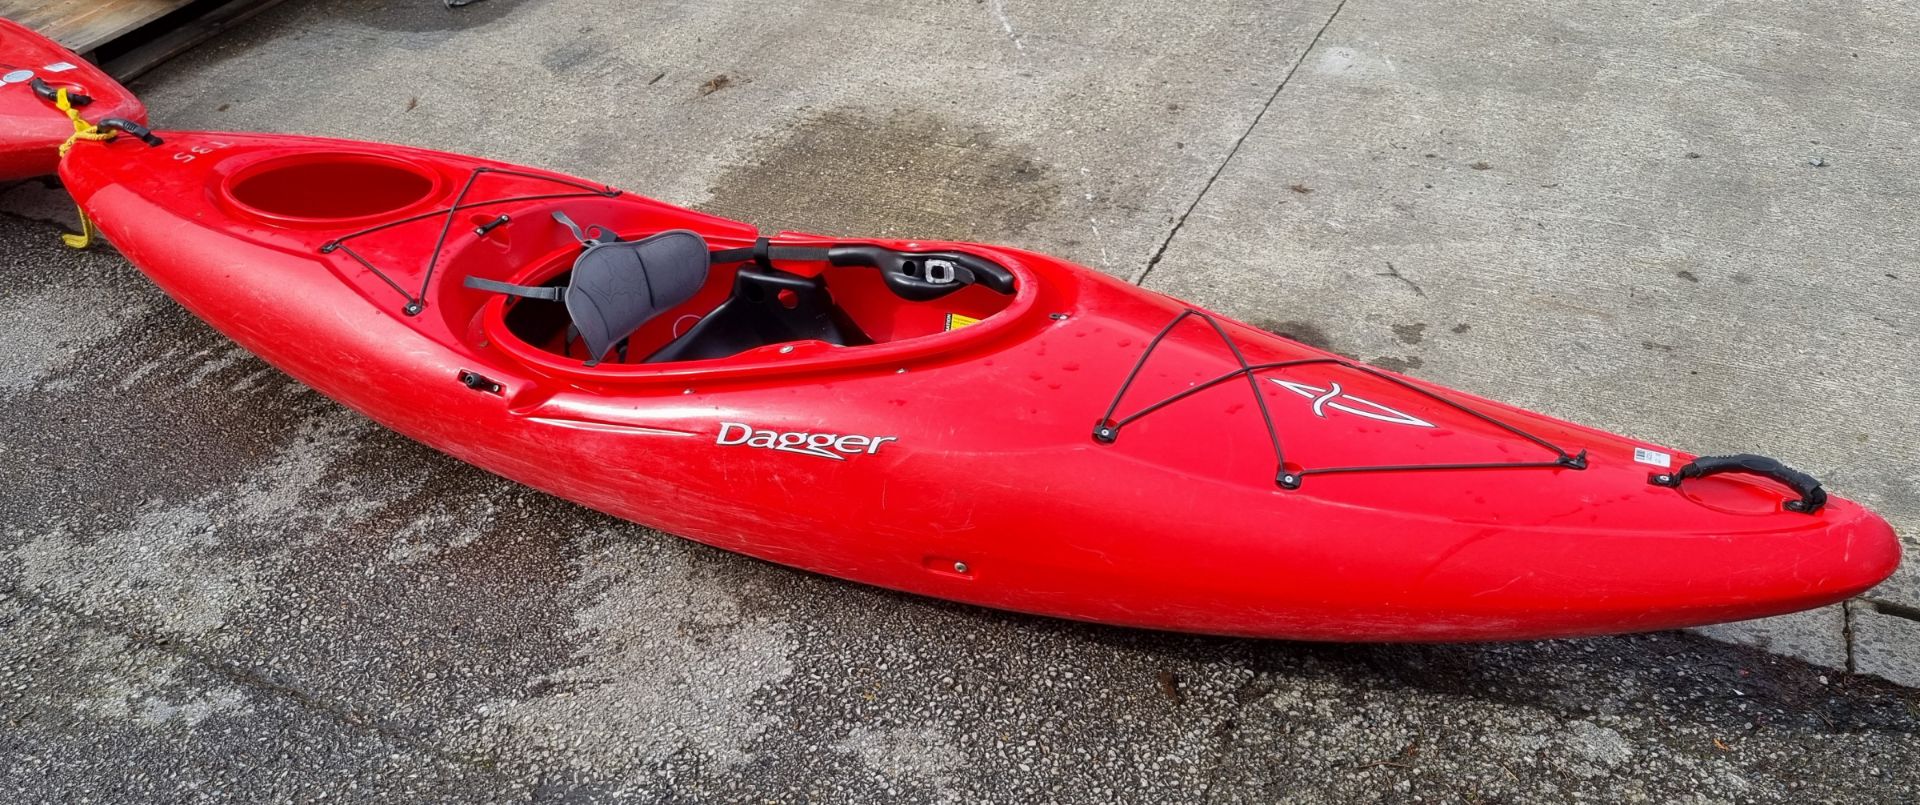 Dagger Katana polyethylene kayak - red - W 3200 x D 660 x H 420mm - Image 2 of 9